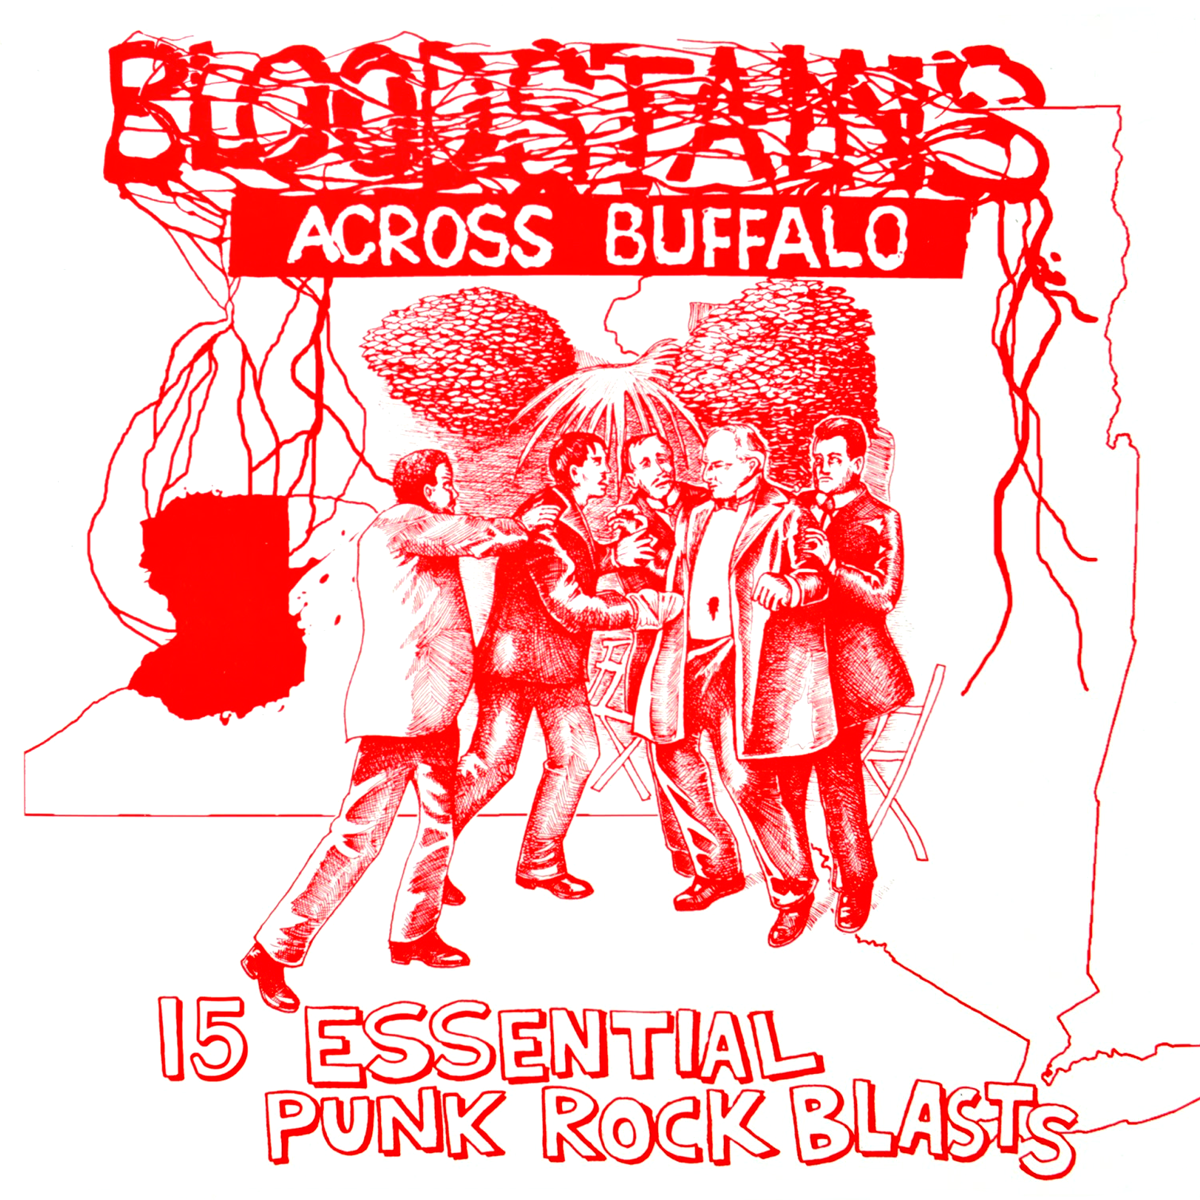 V/A- Bloodstains Across Buffalo LP